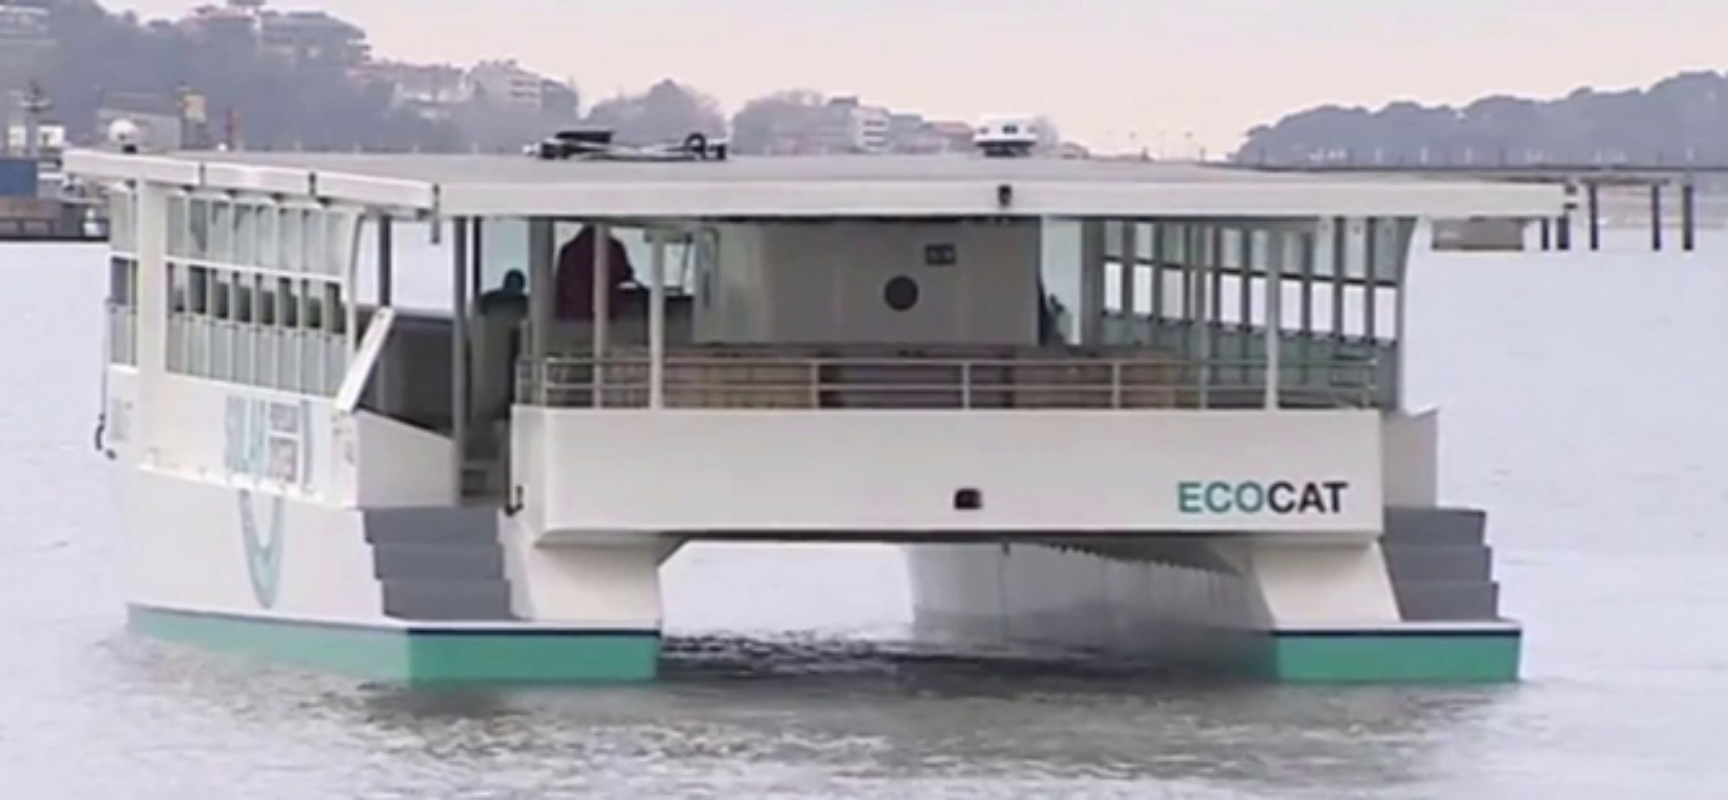 Construido en Cantabria el primer barco de pasajeros con energía electrosolar de Europa